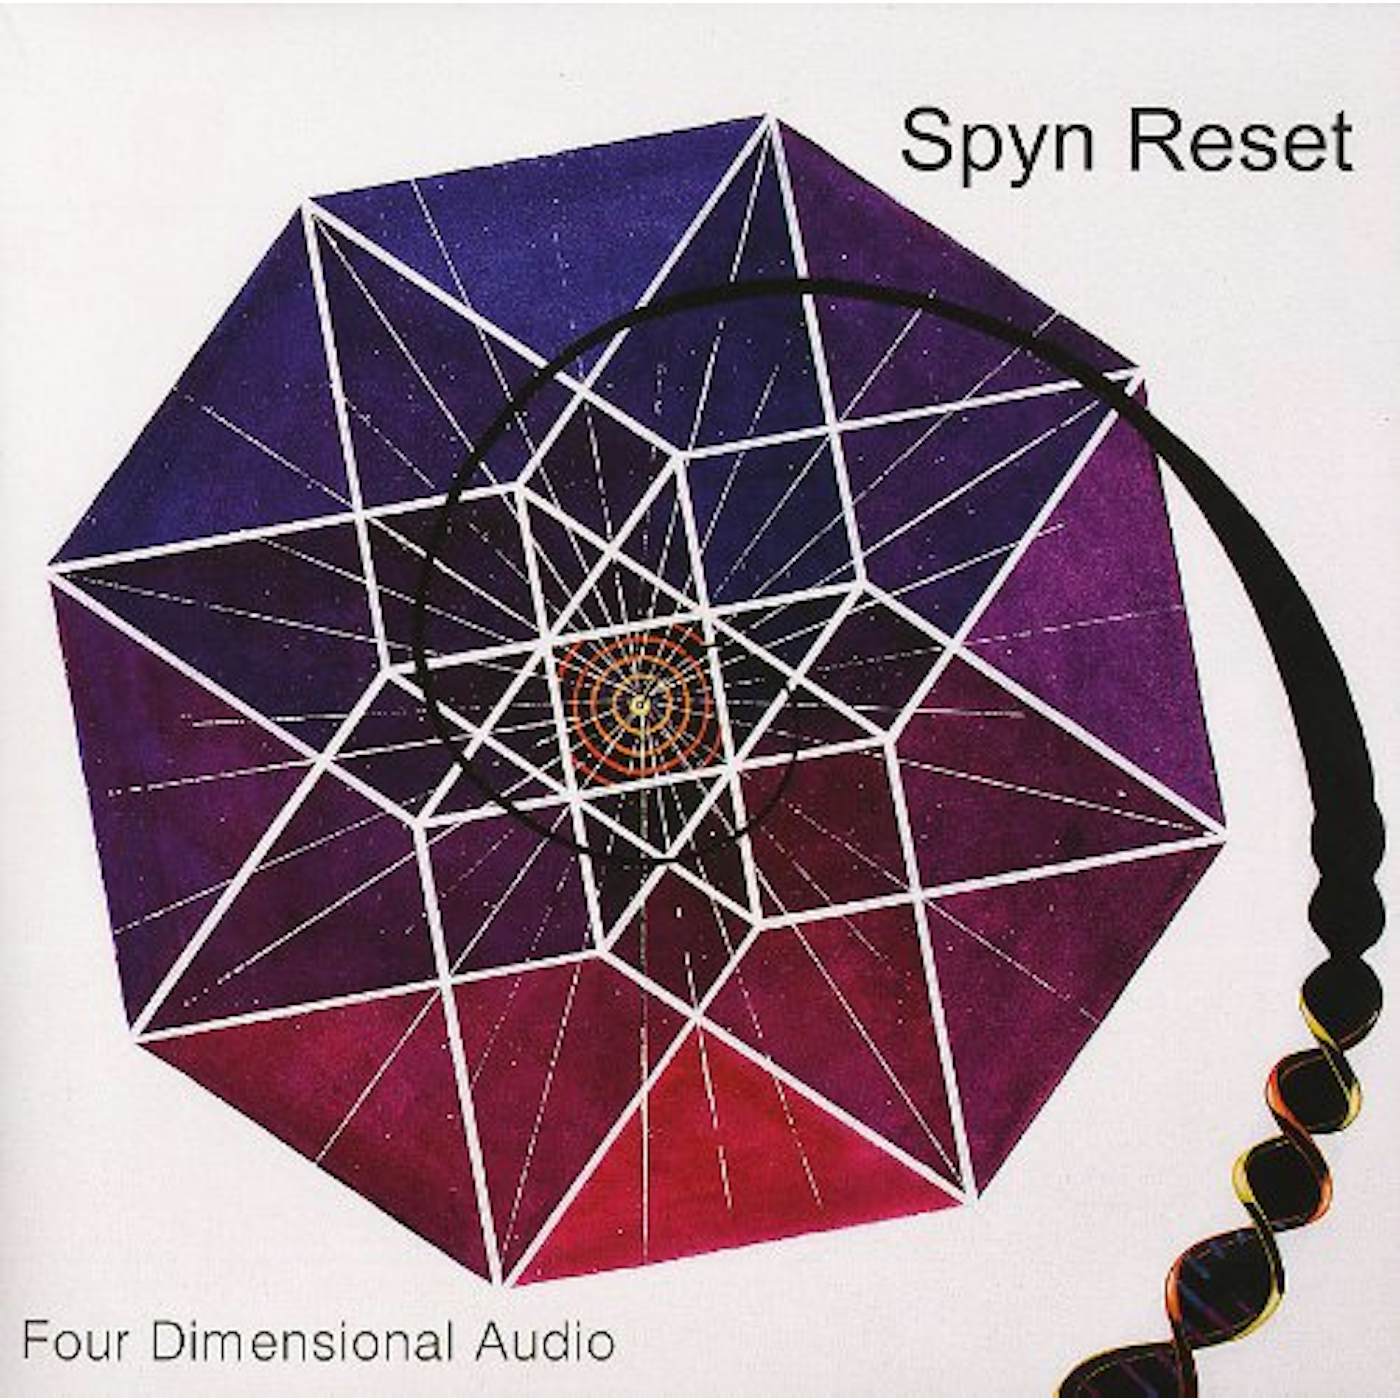 Spyn Reset Four Dimensional Audio Vinyl Record